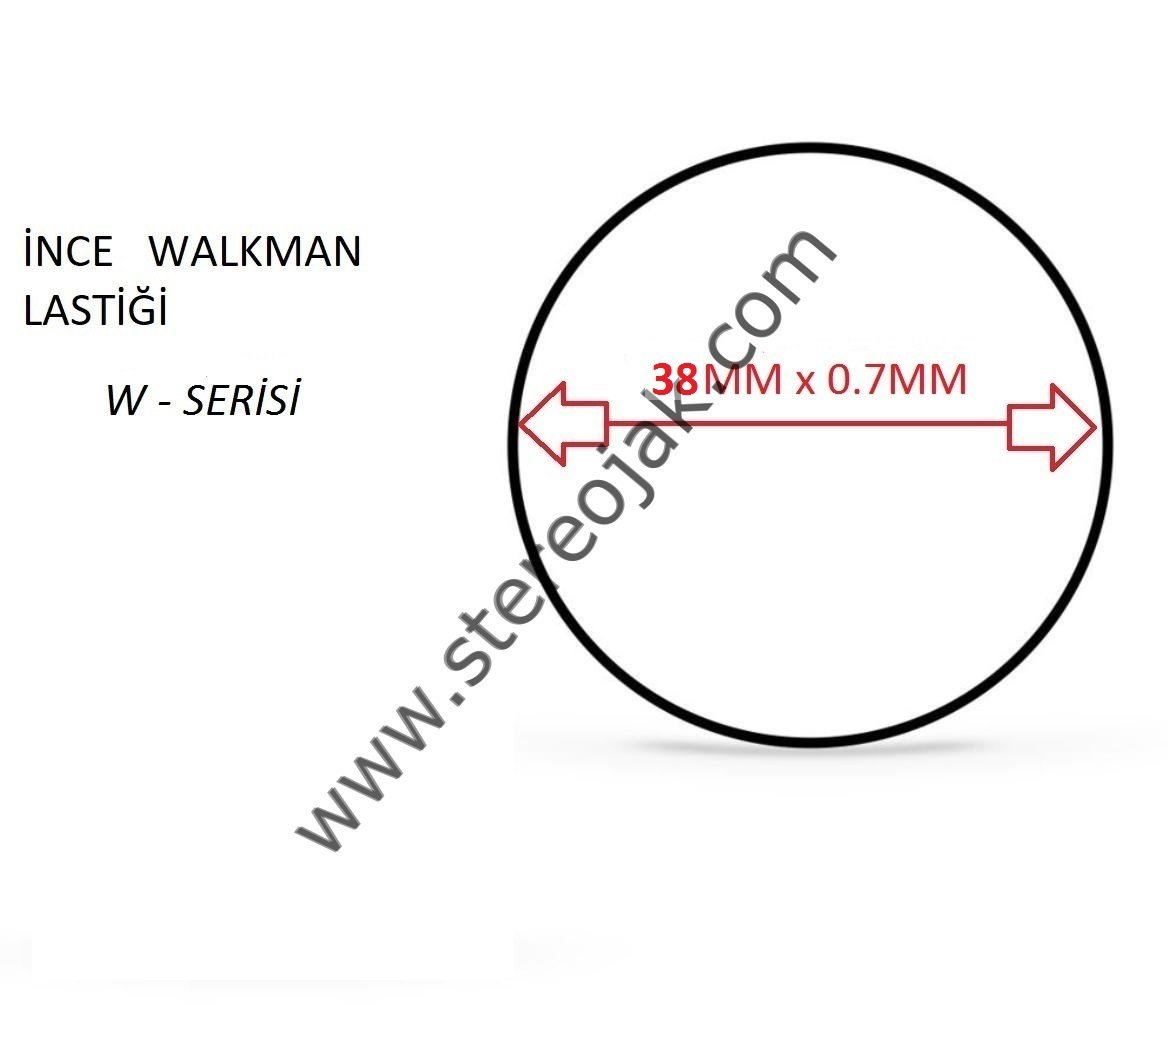 Walkman lastiği 38 mm x 0.7 mm